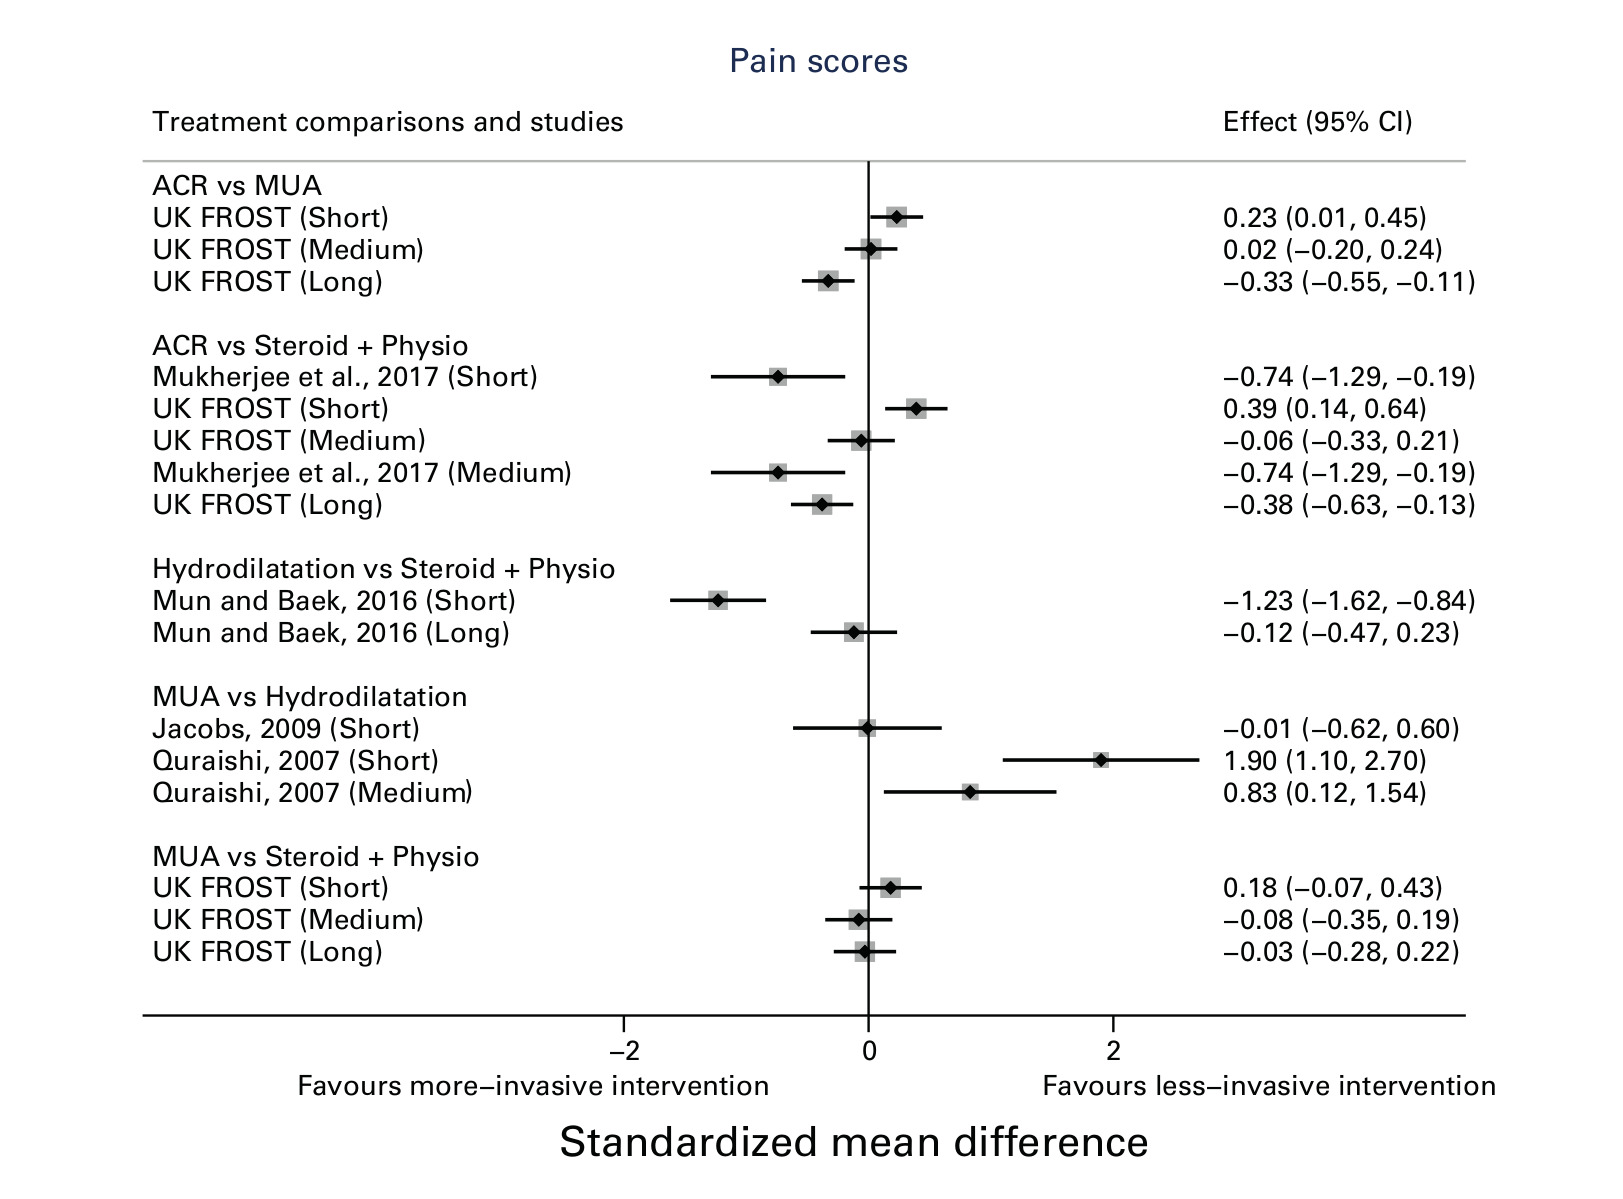 Fig. 6 
            Pain scores across different studies. ACR, arthroscopic capsular release; CI, confidence interval; MUA, manipulation under anaesthesia.
          